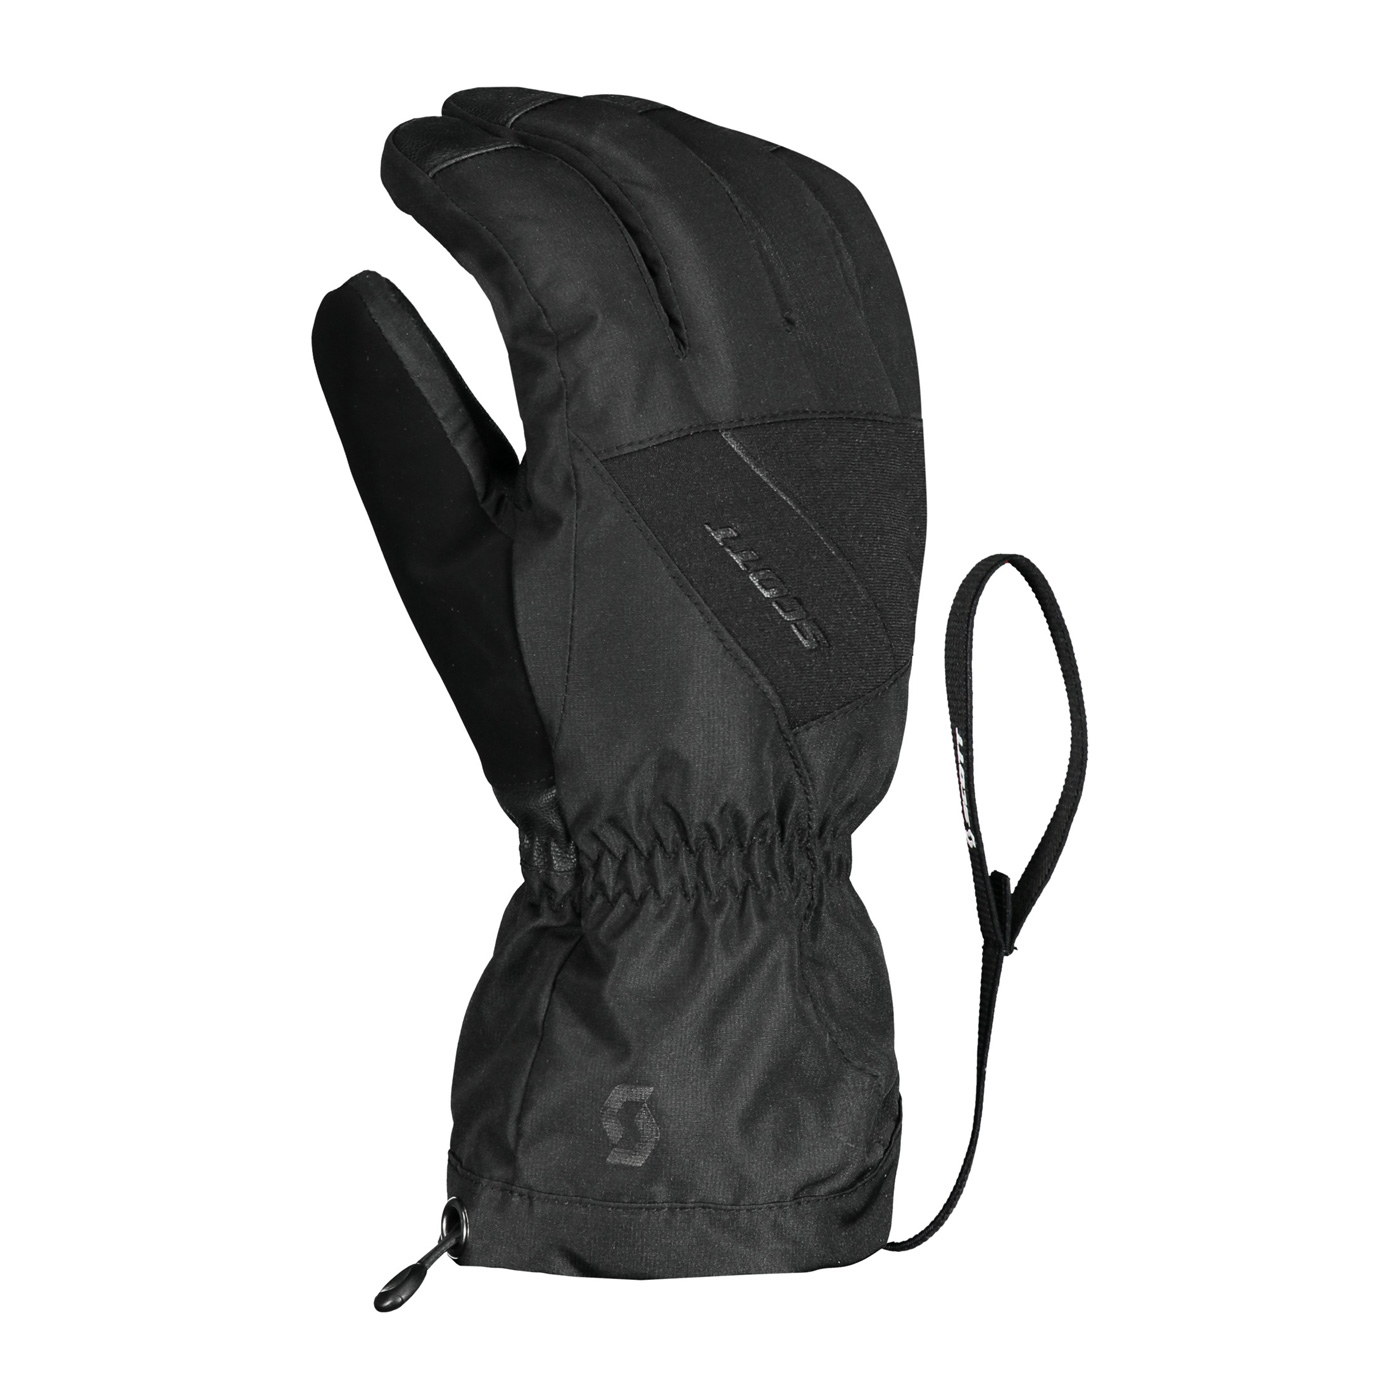 Scott Ultimate GTX Ski Glove- Black - L, BLACK